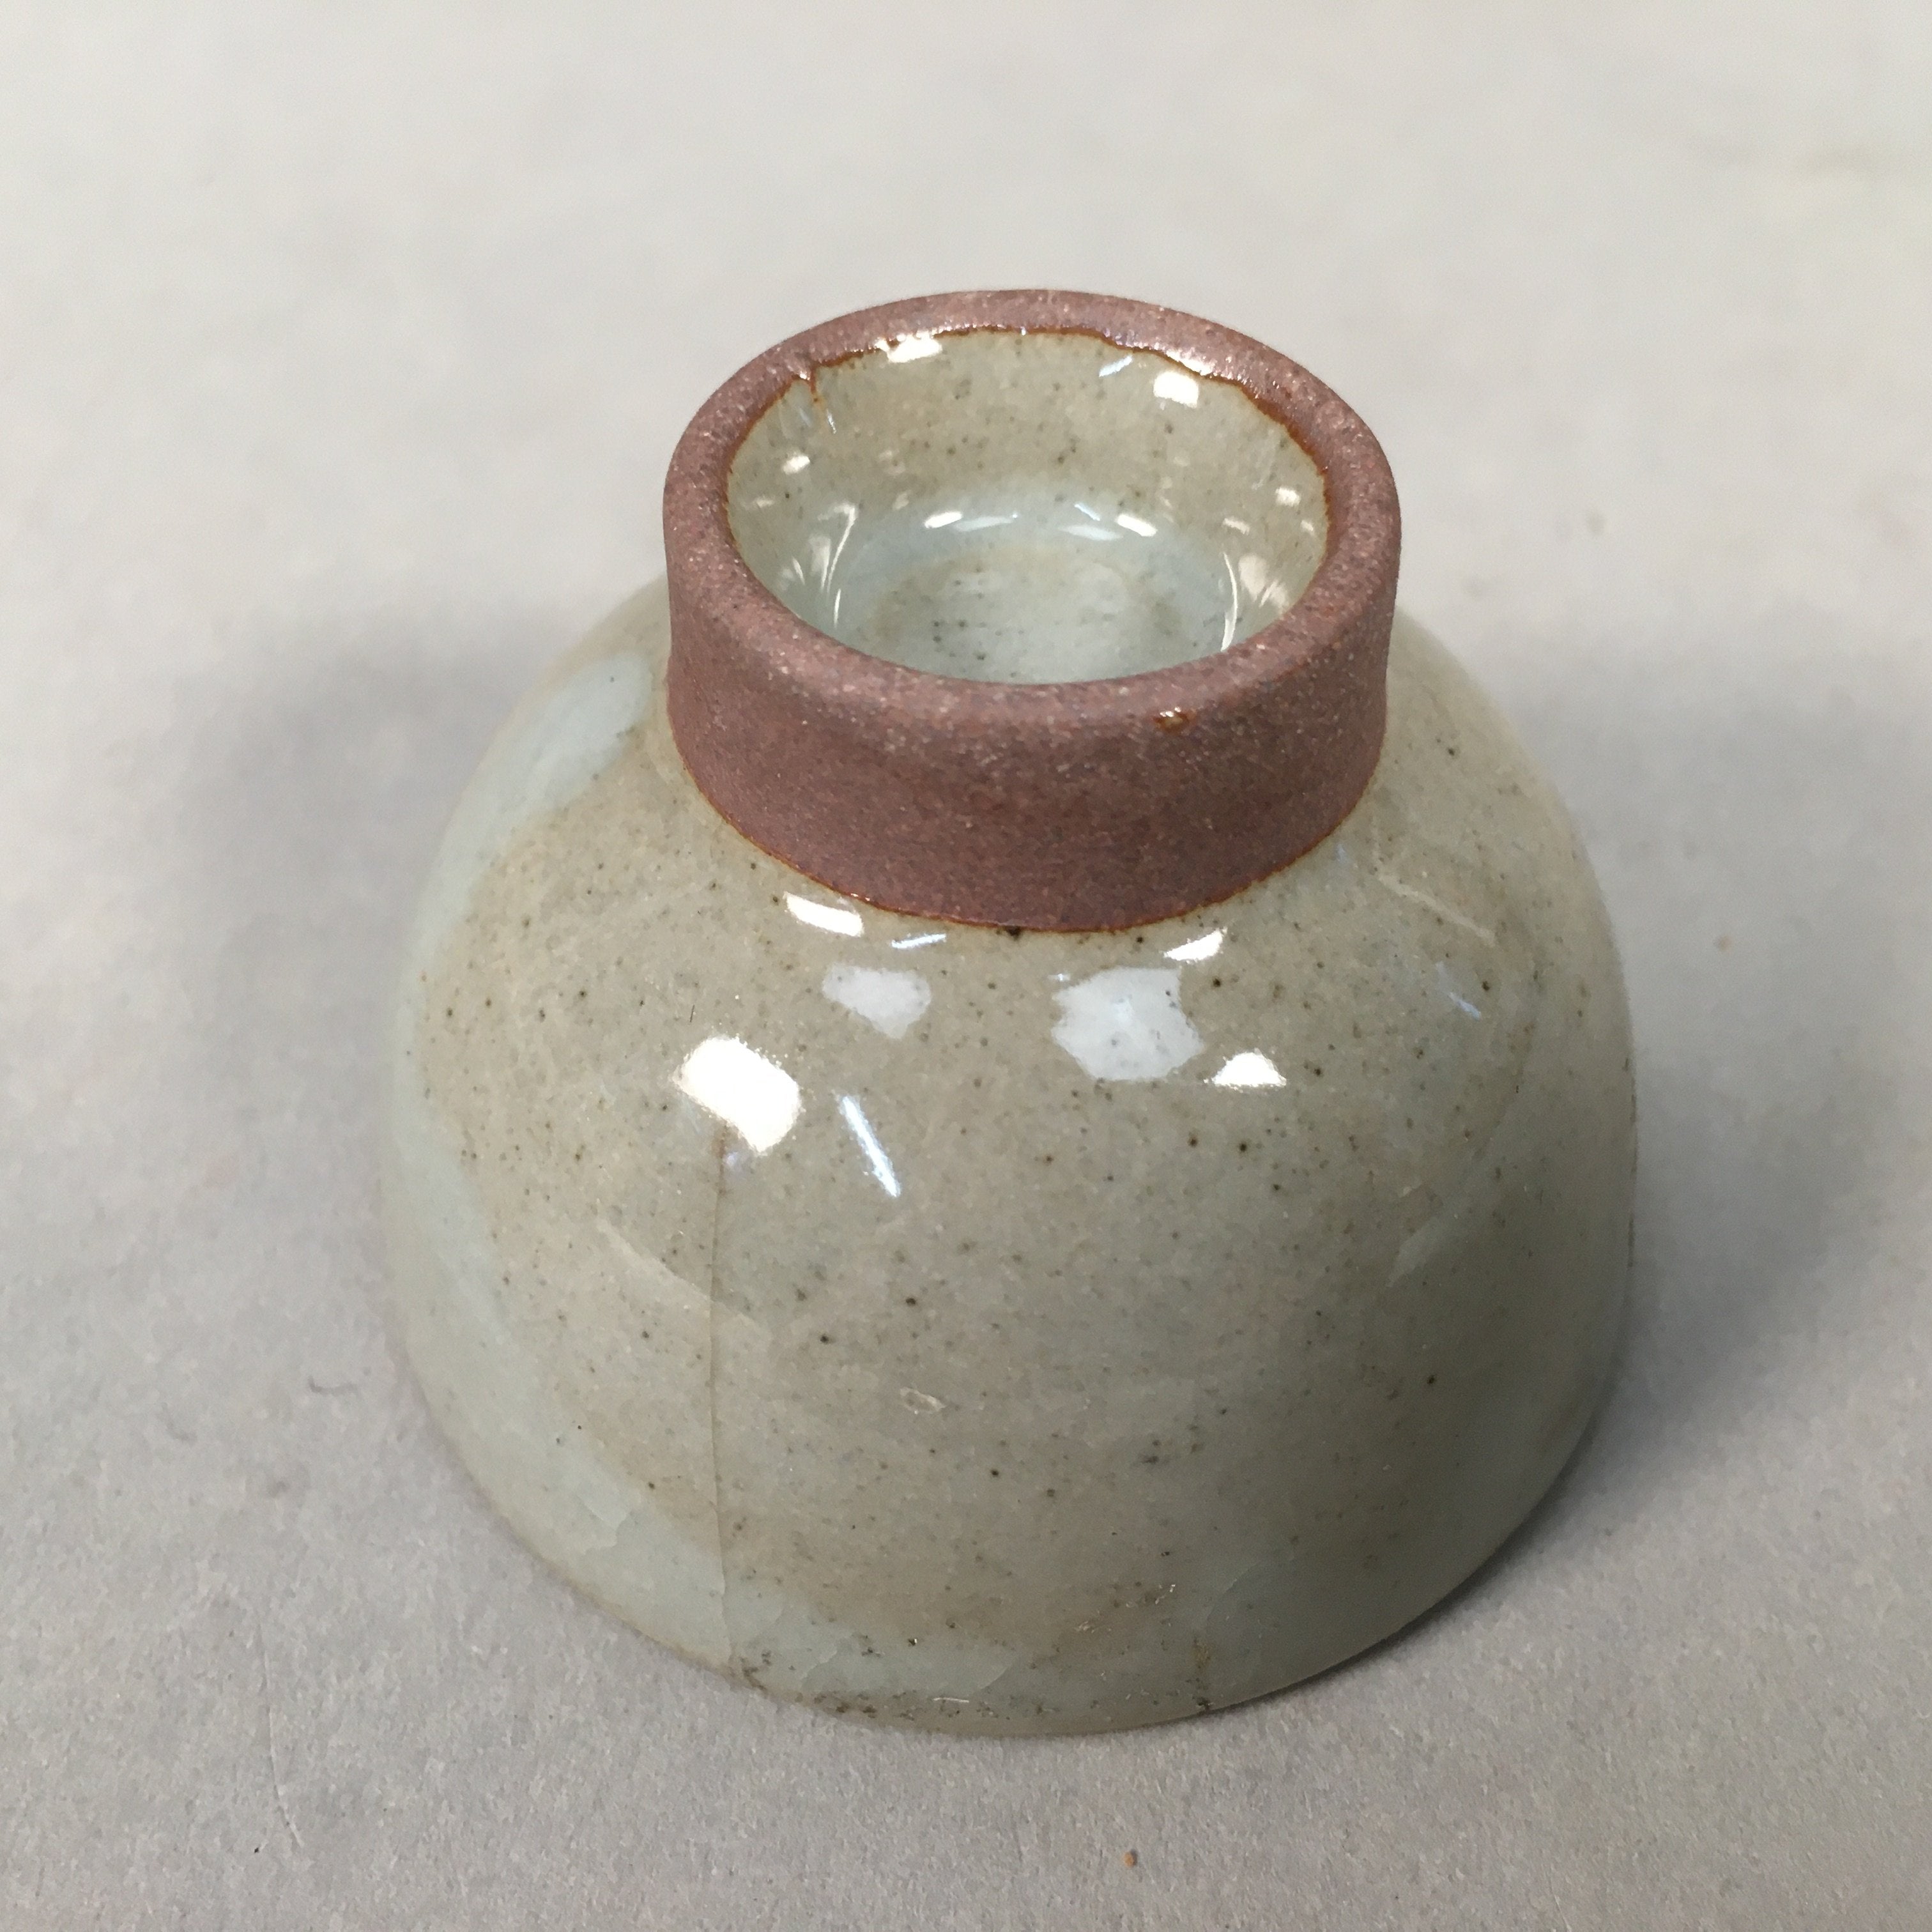 Japanese Ceramic Sake Cup Guinomi Sakazuki Vtg Pottery Gray Crackle GU879